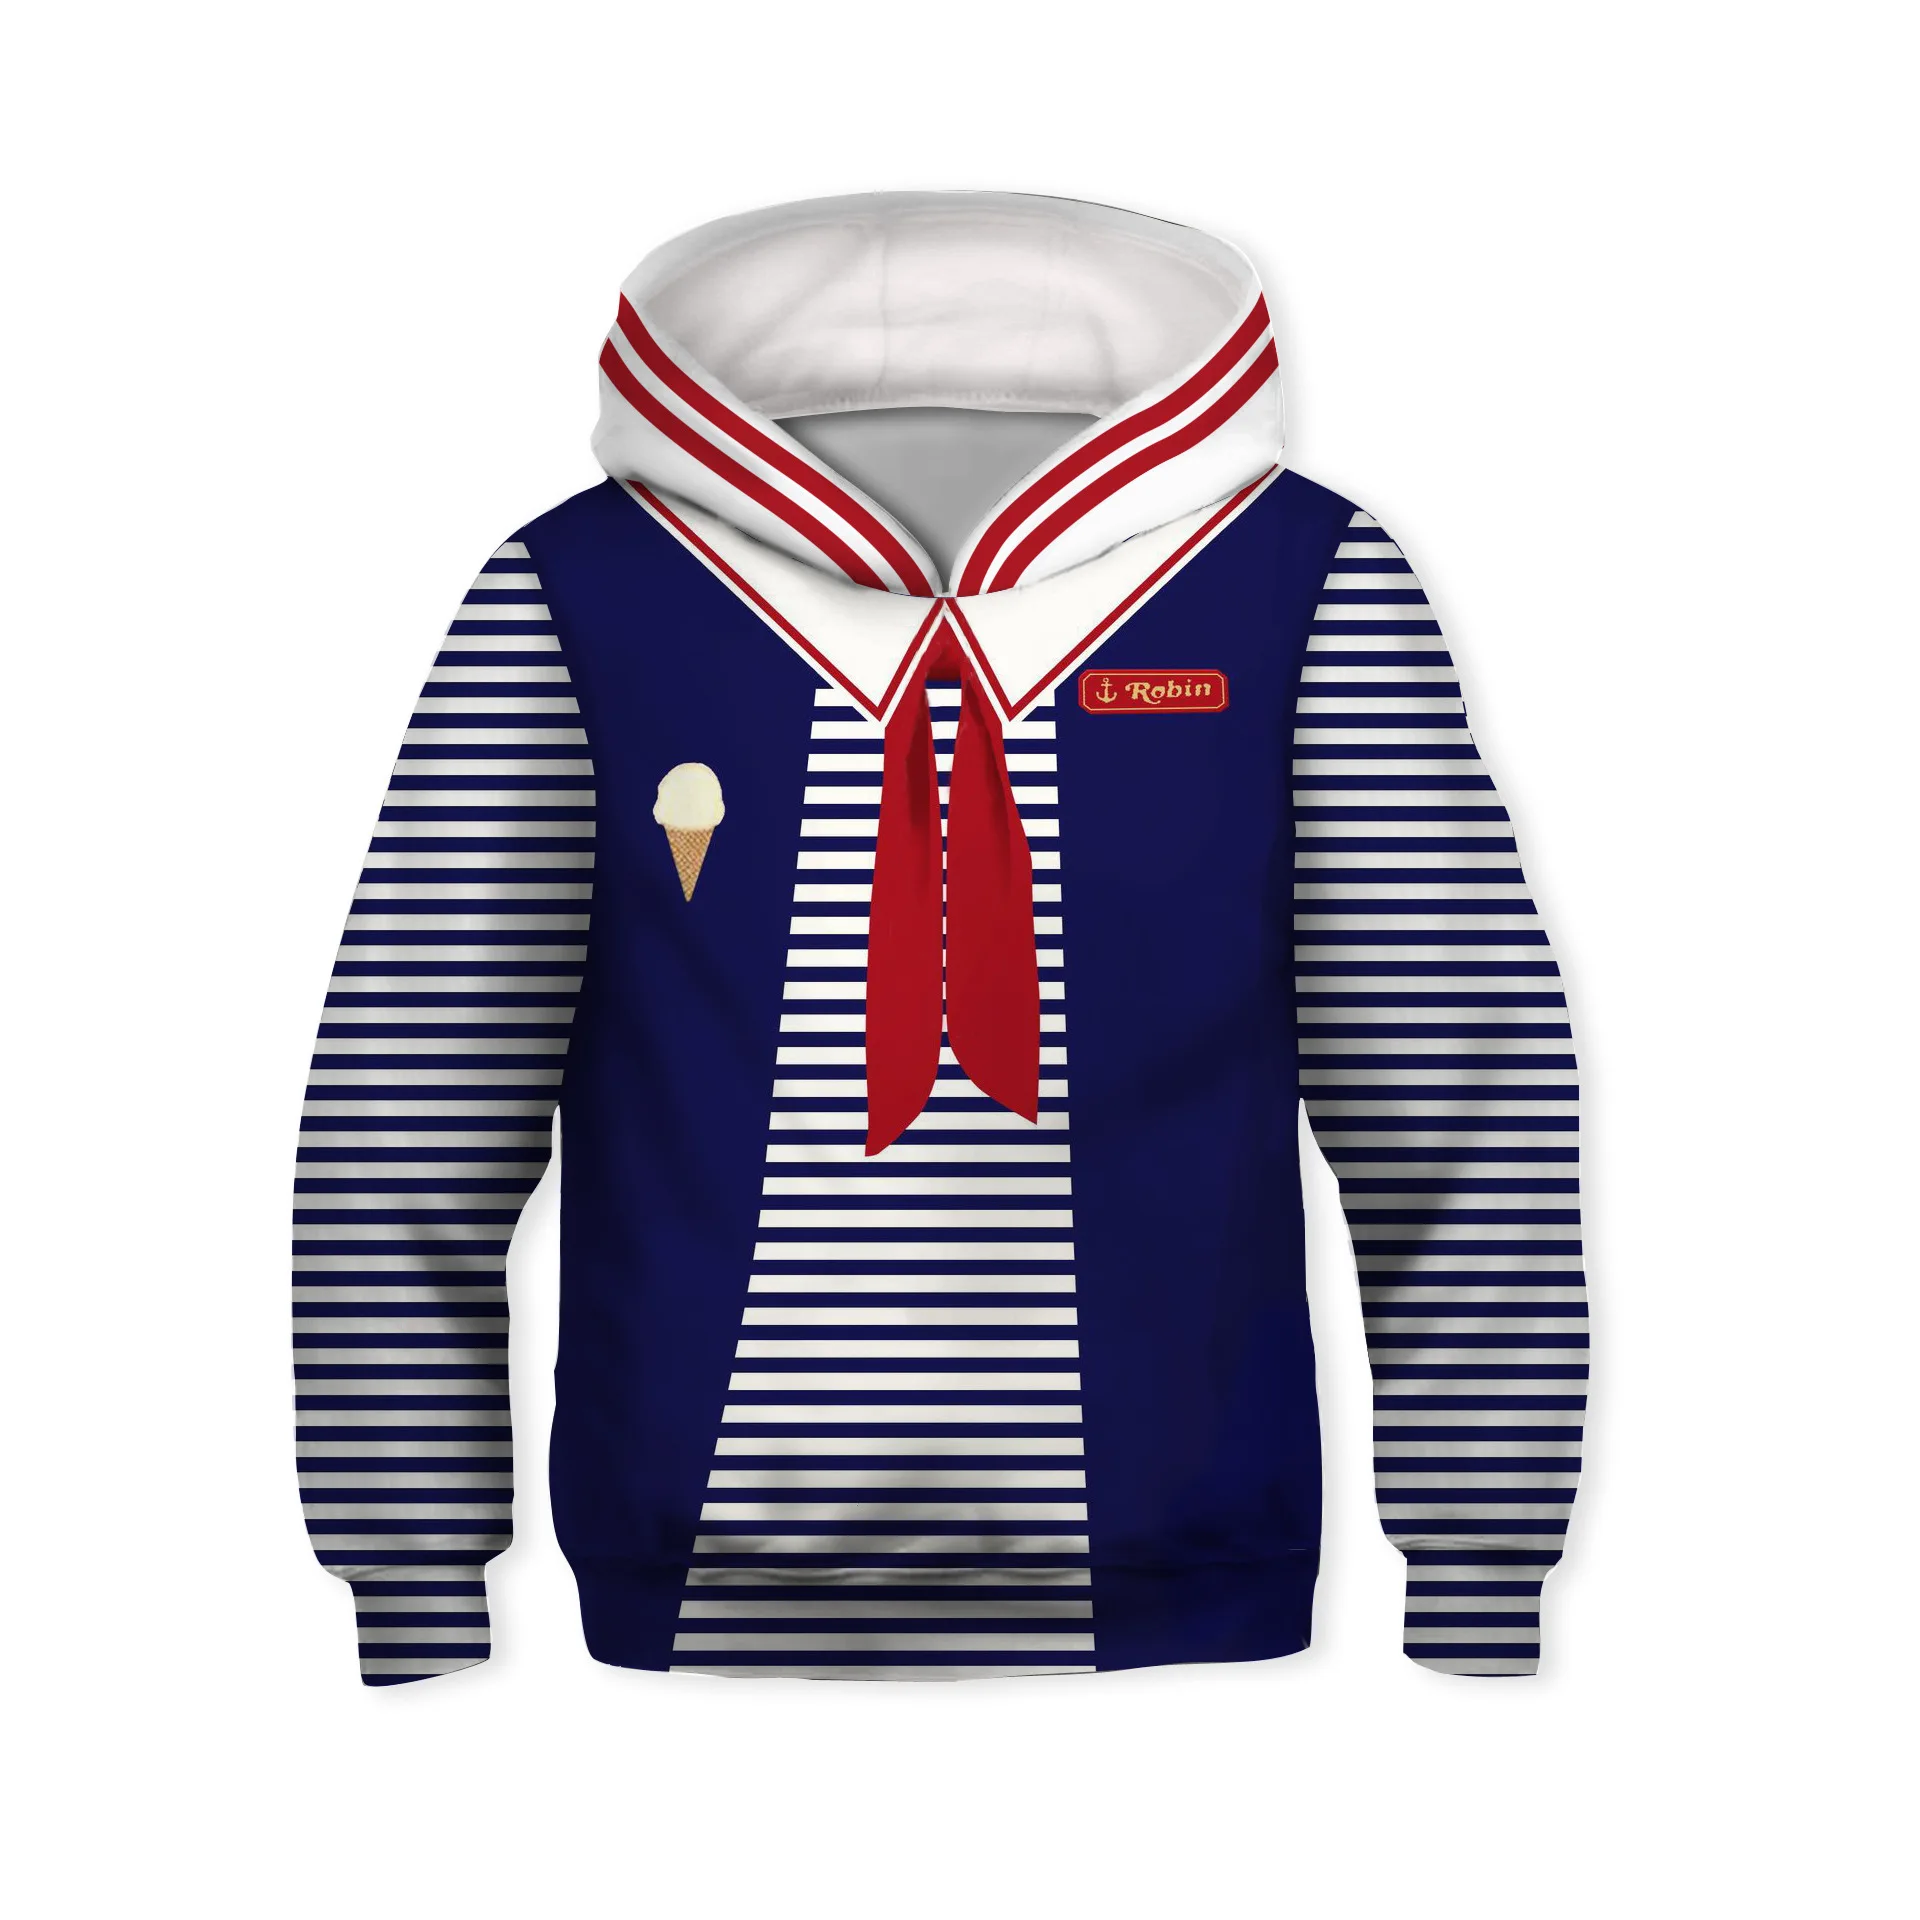 Sylveon Cosplay Hoodie 3D Printed Sweatshirt Zip Up Jacket Pullover Coat Gift 